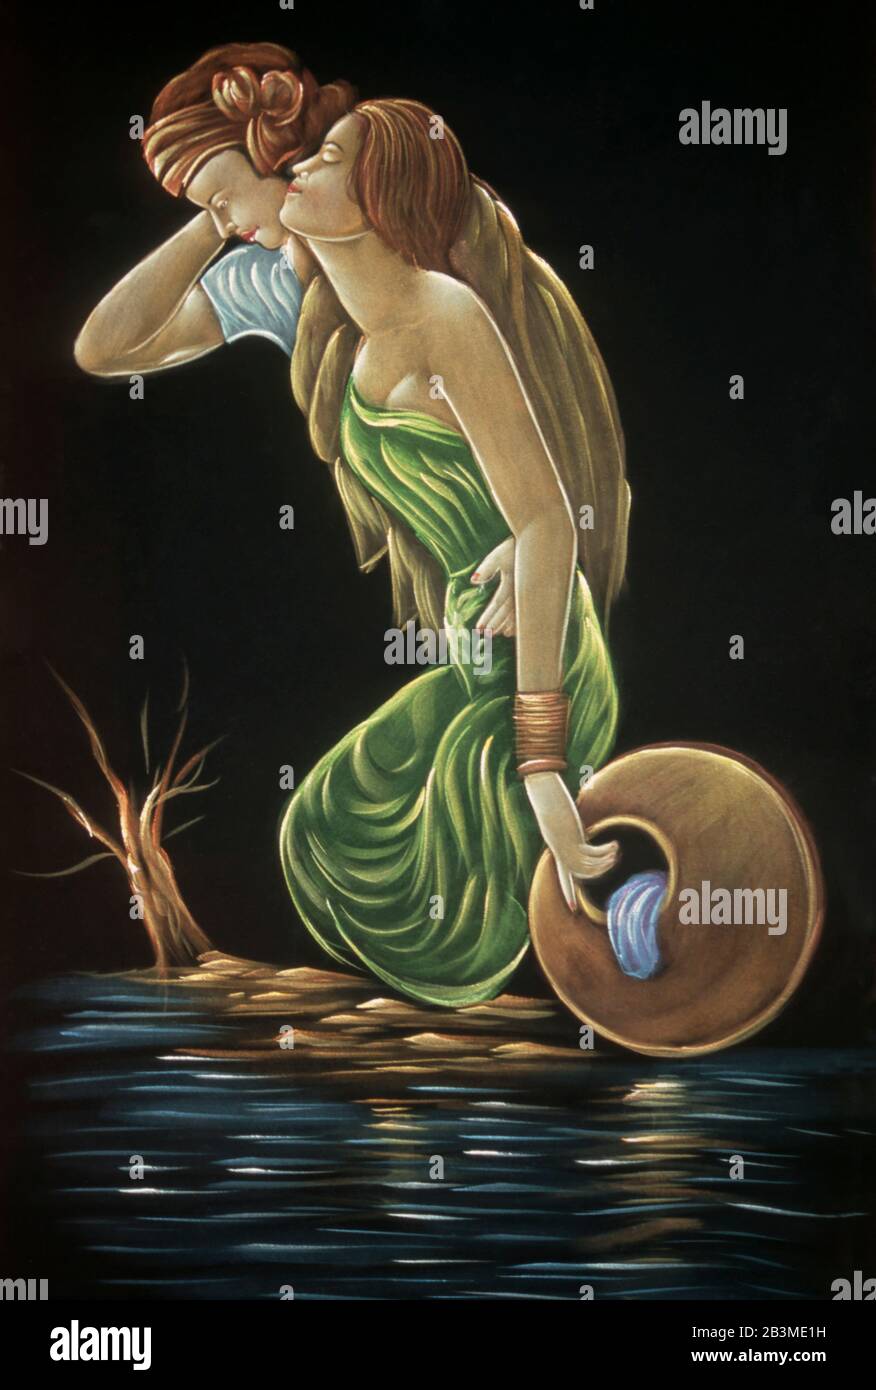 Sohni mahiwal painting on velvet, India, Asia Stock Photo